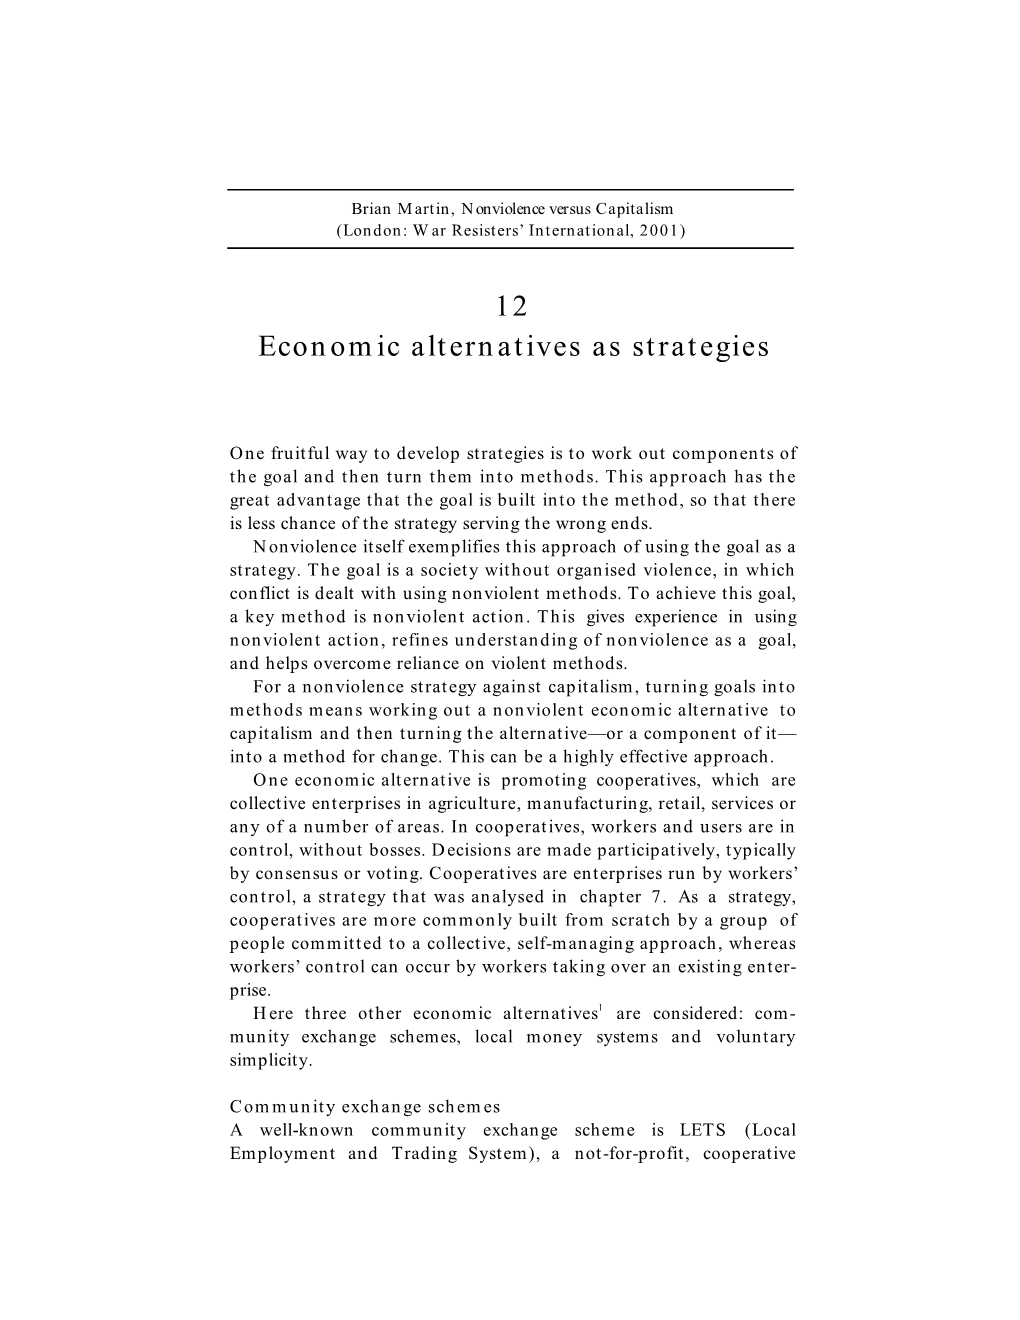 Nonviolence Versus Capitalism, Chapter 12, Economic Alternatives